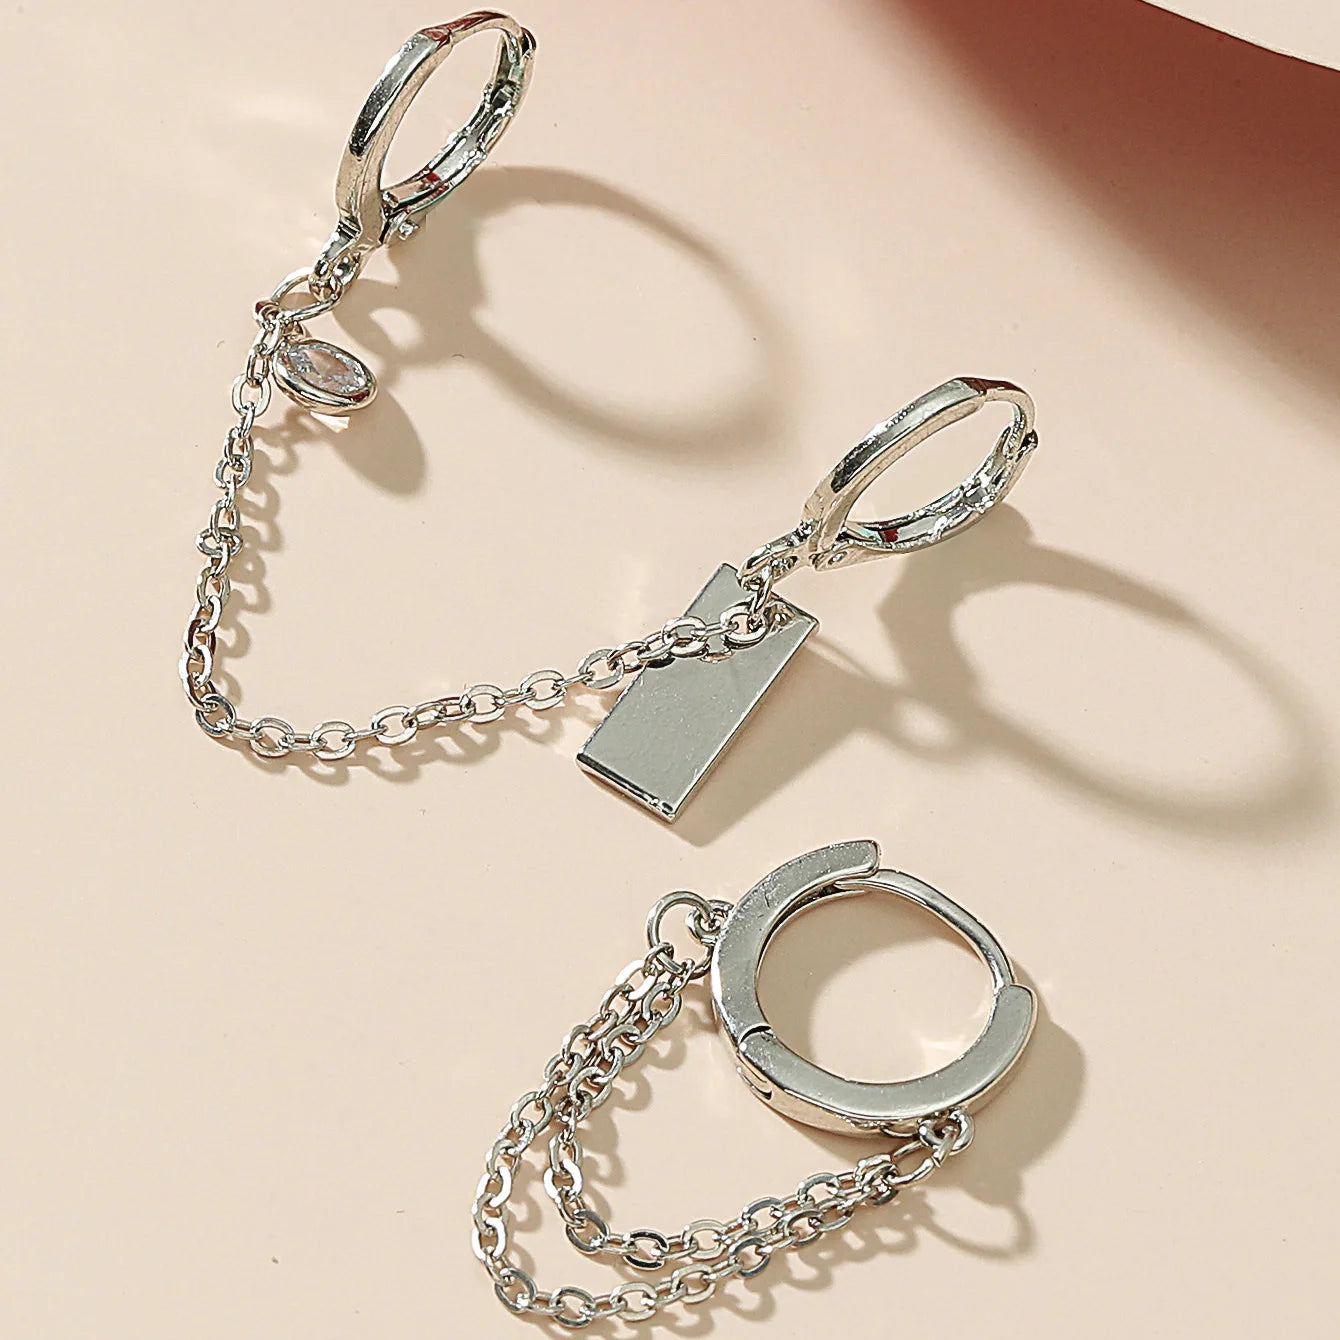 1 Set Hip Hop Chained Dangle Earrings For Women Men Teens 2021 New Trendy Punk Chain Earring Fashion Jewelry Gifts